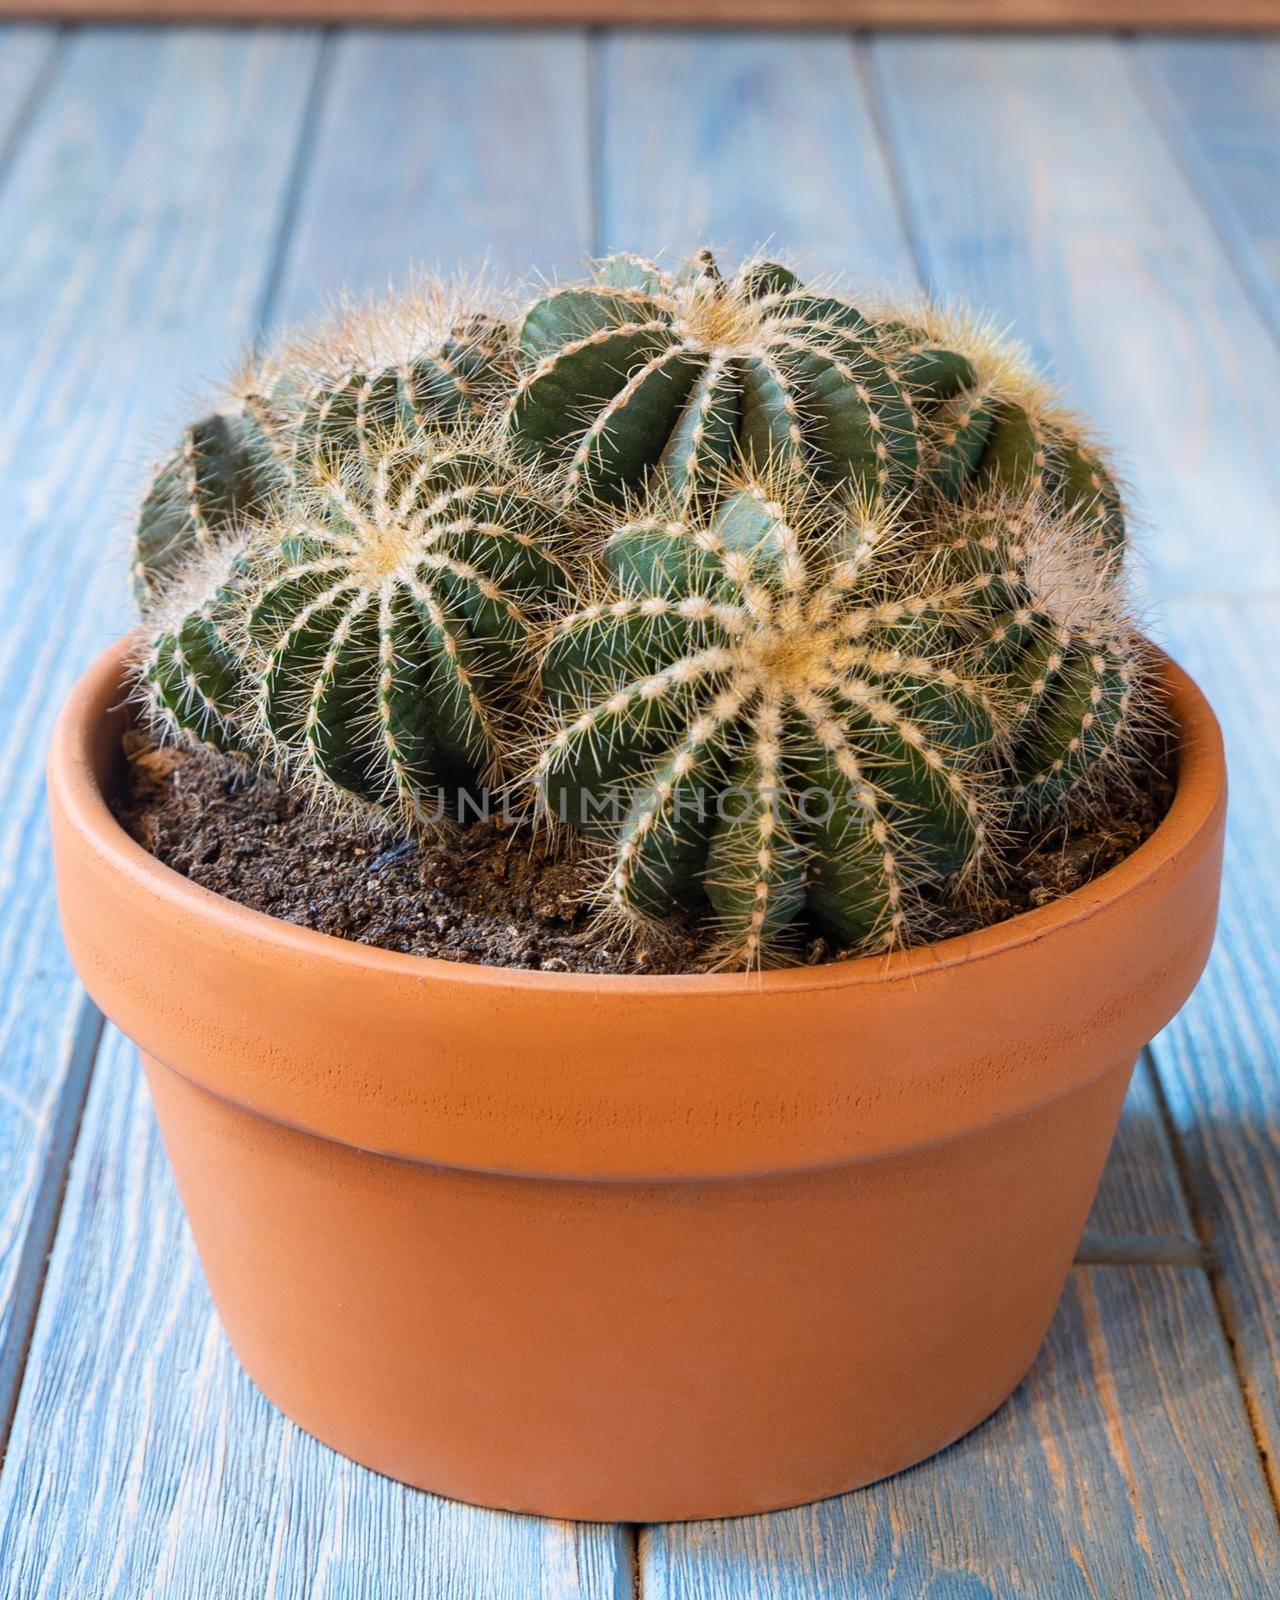 Cactuses in the red ceramic pot